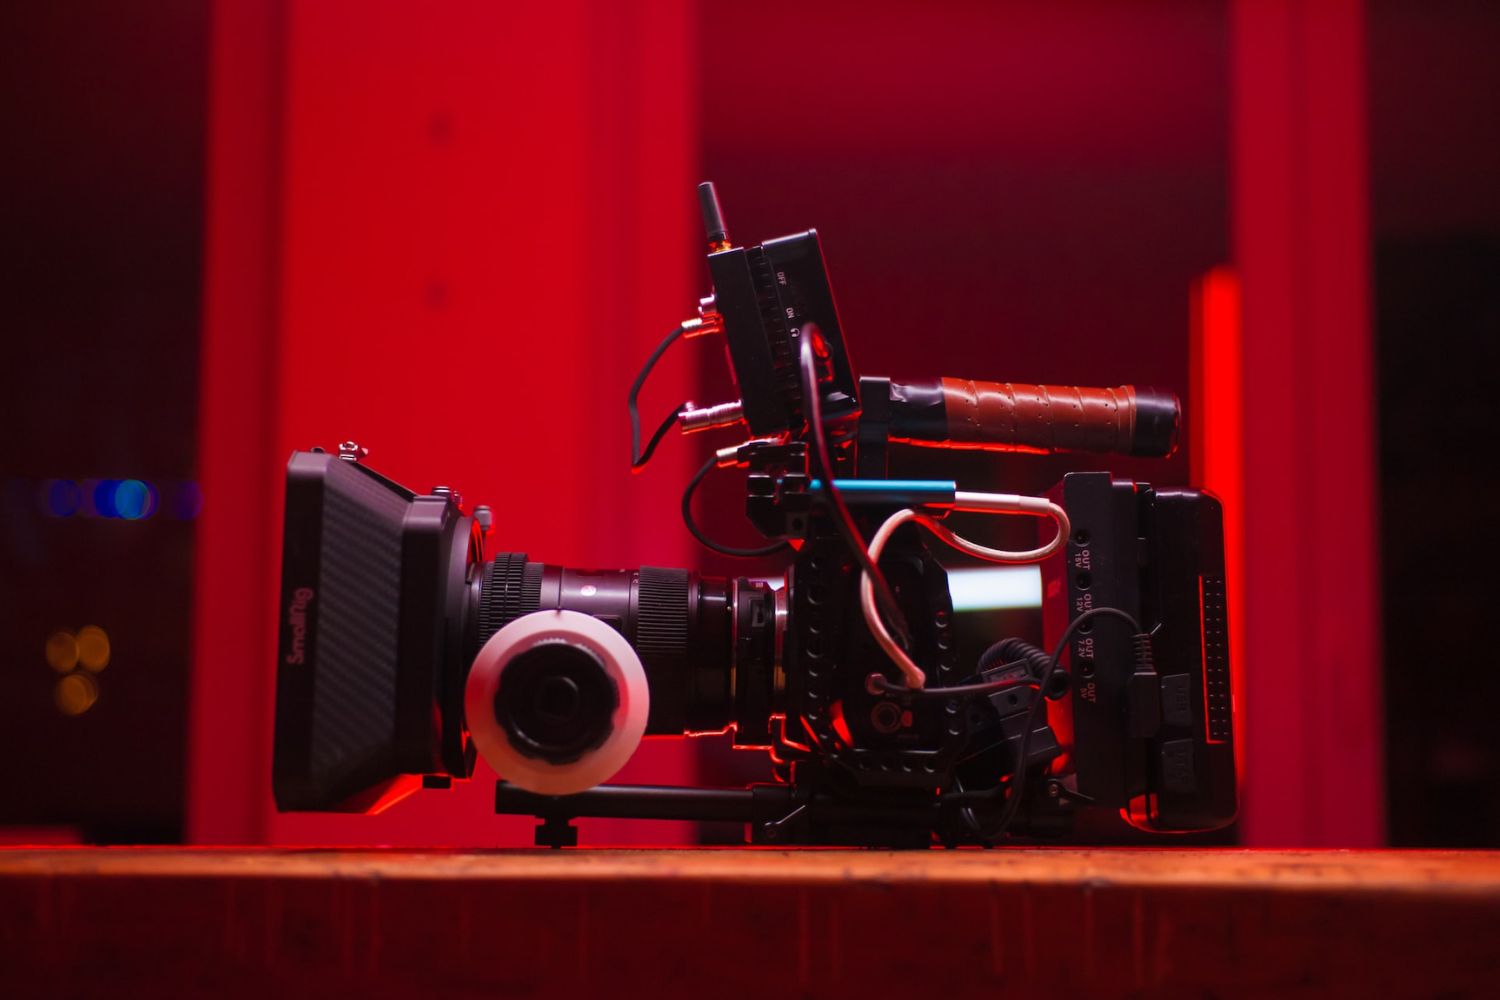 Blackmagic camera in red light Photo by Levi Stute on Unsplash